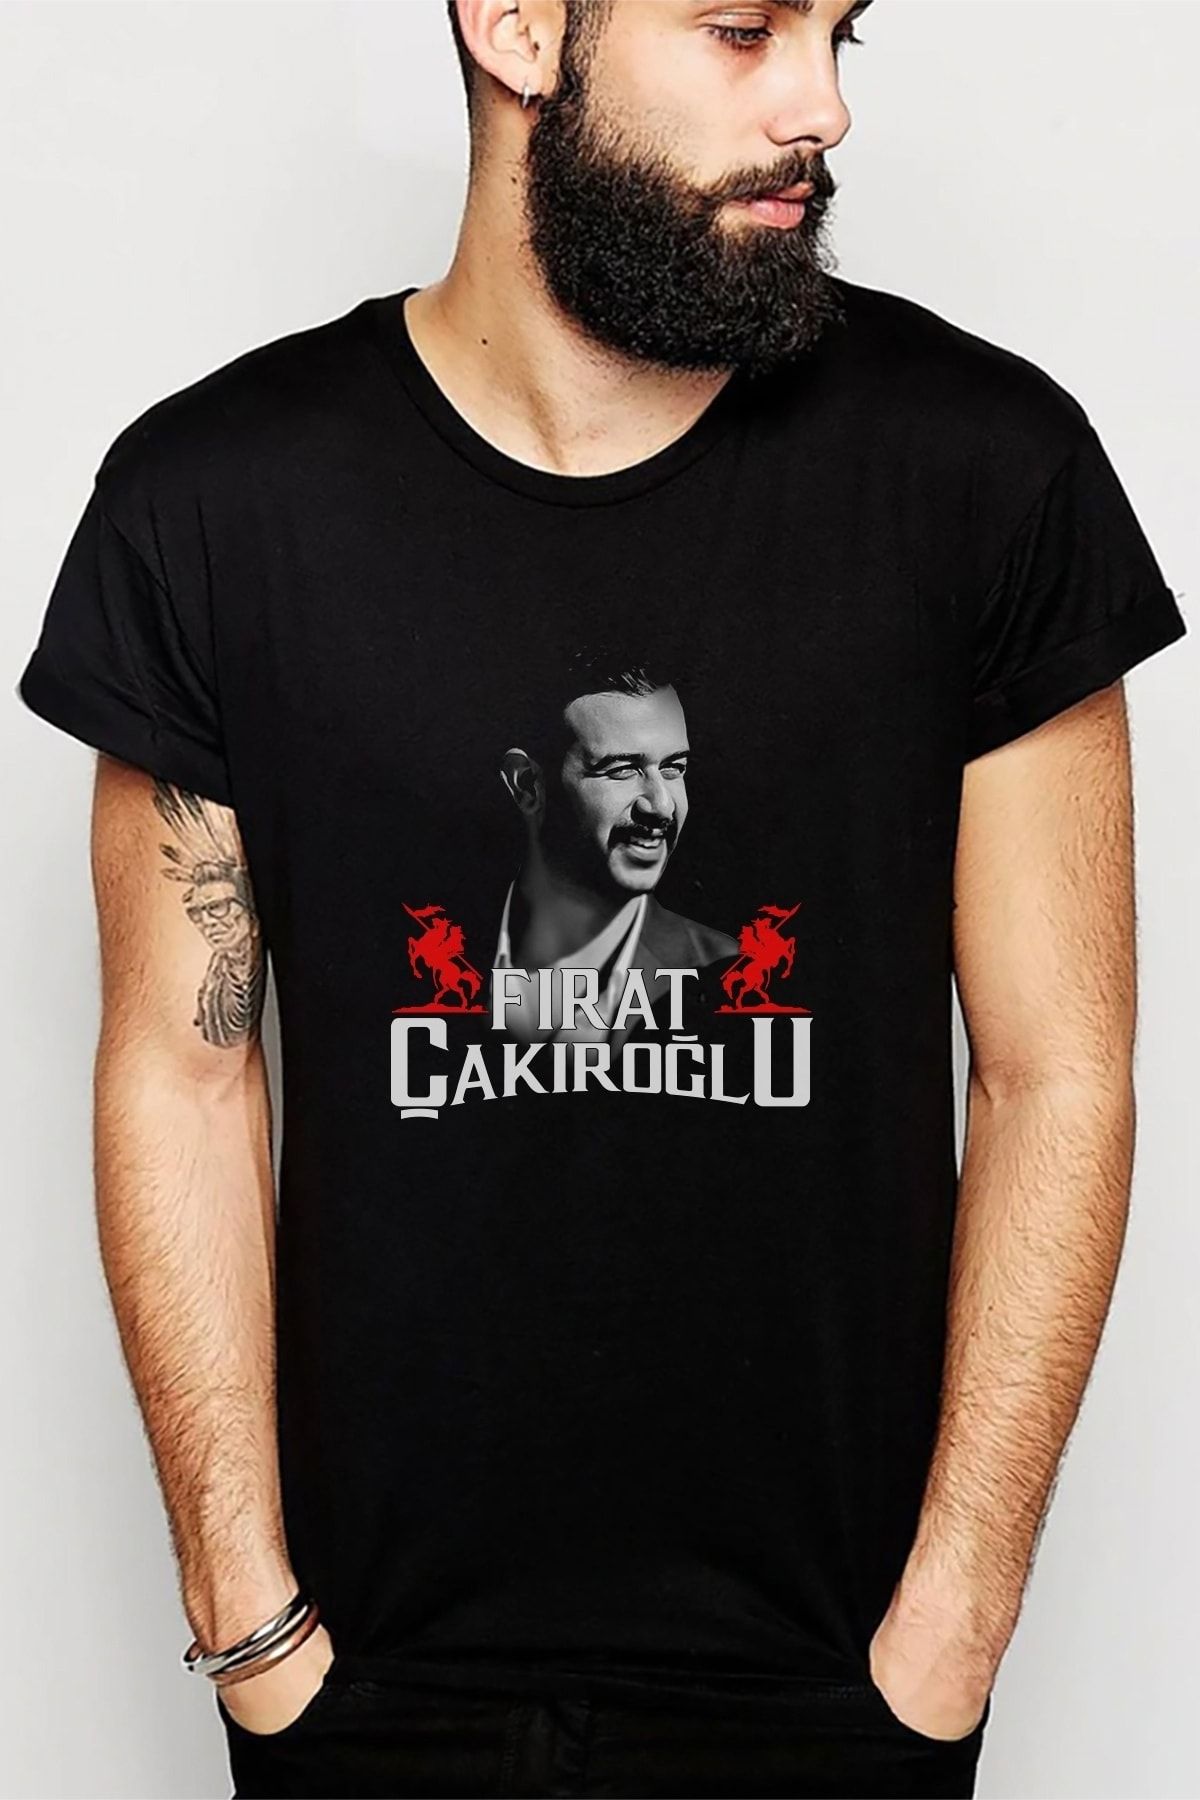 QIVI Firat Çakiroğlu Baskılı Siyah Erkek Örme Tshirt T-shirt Tişört T Shirt